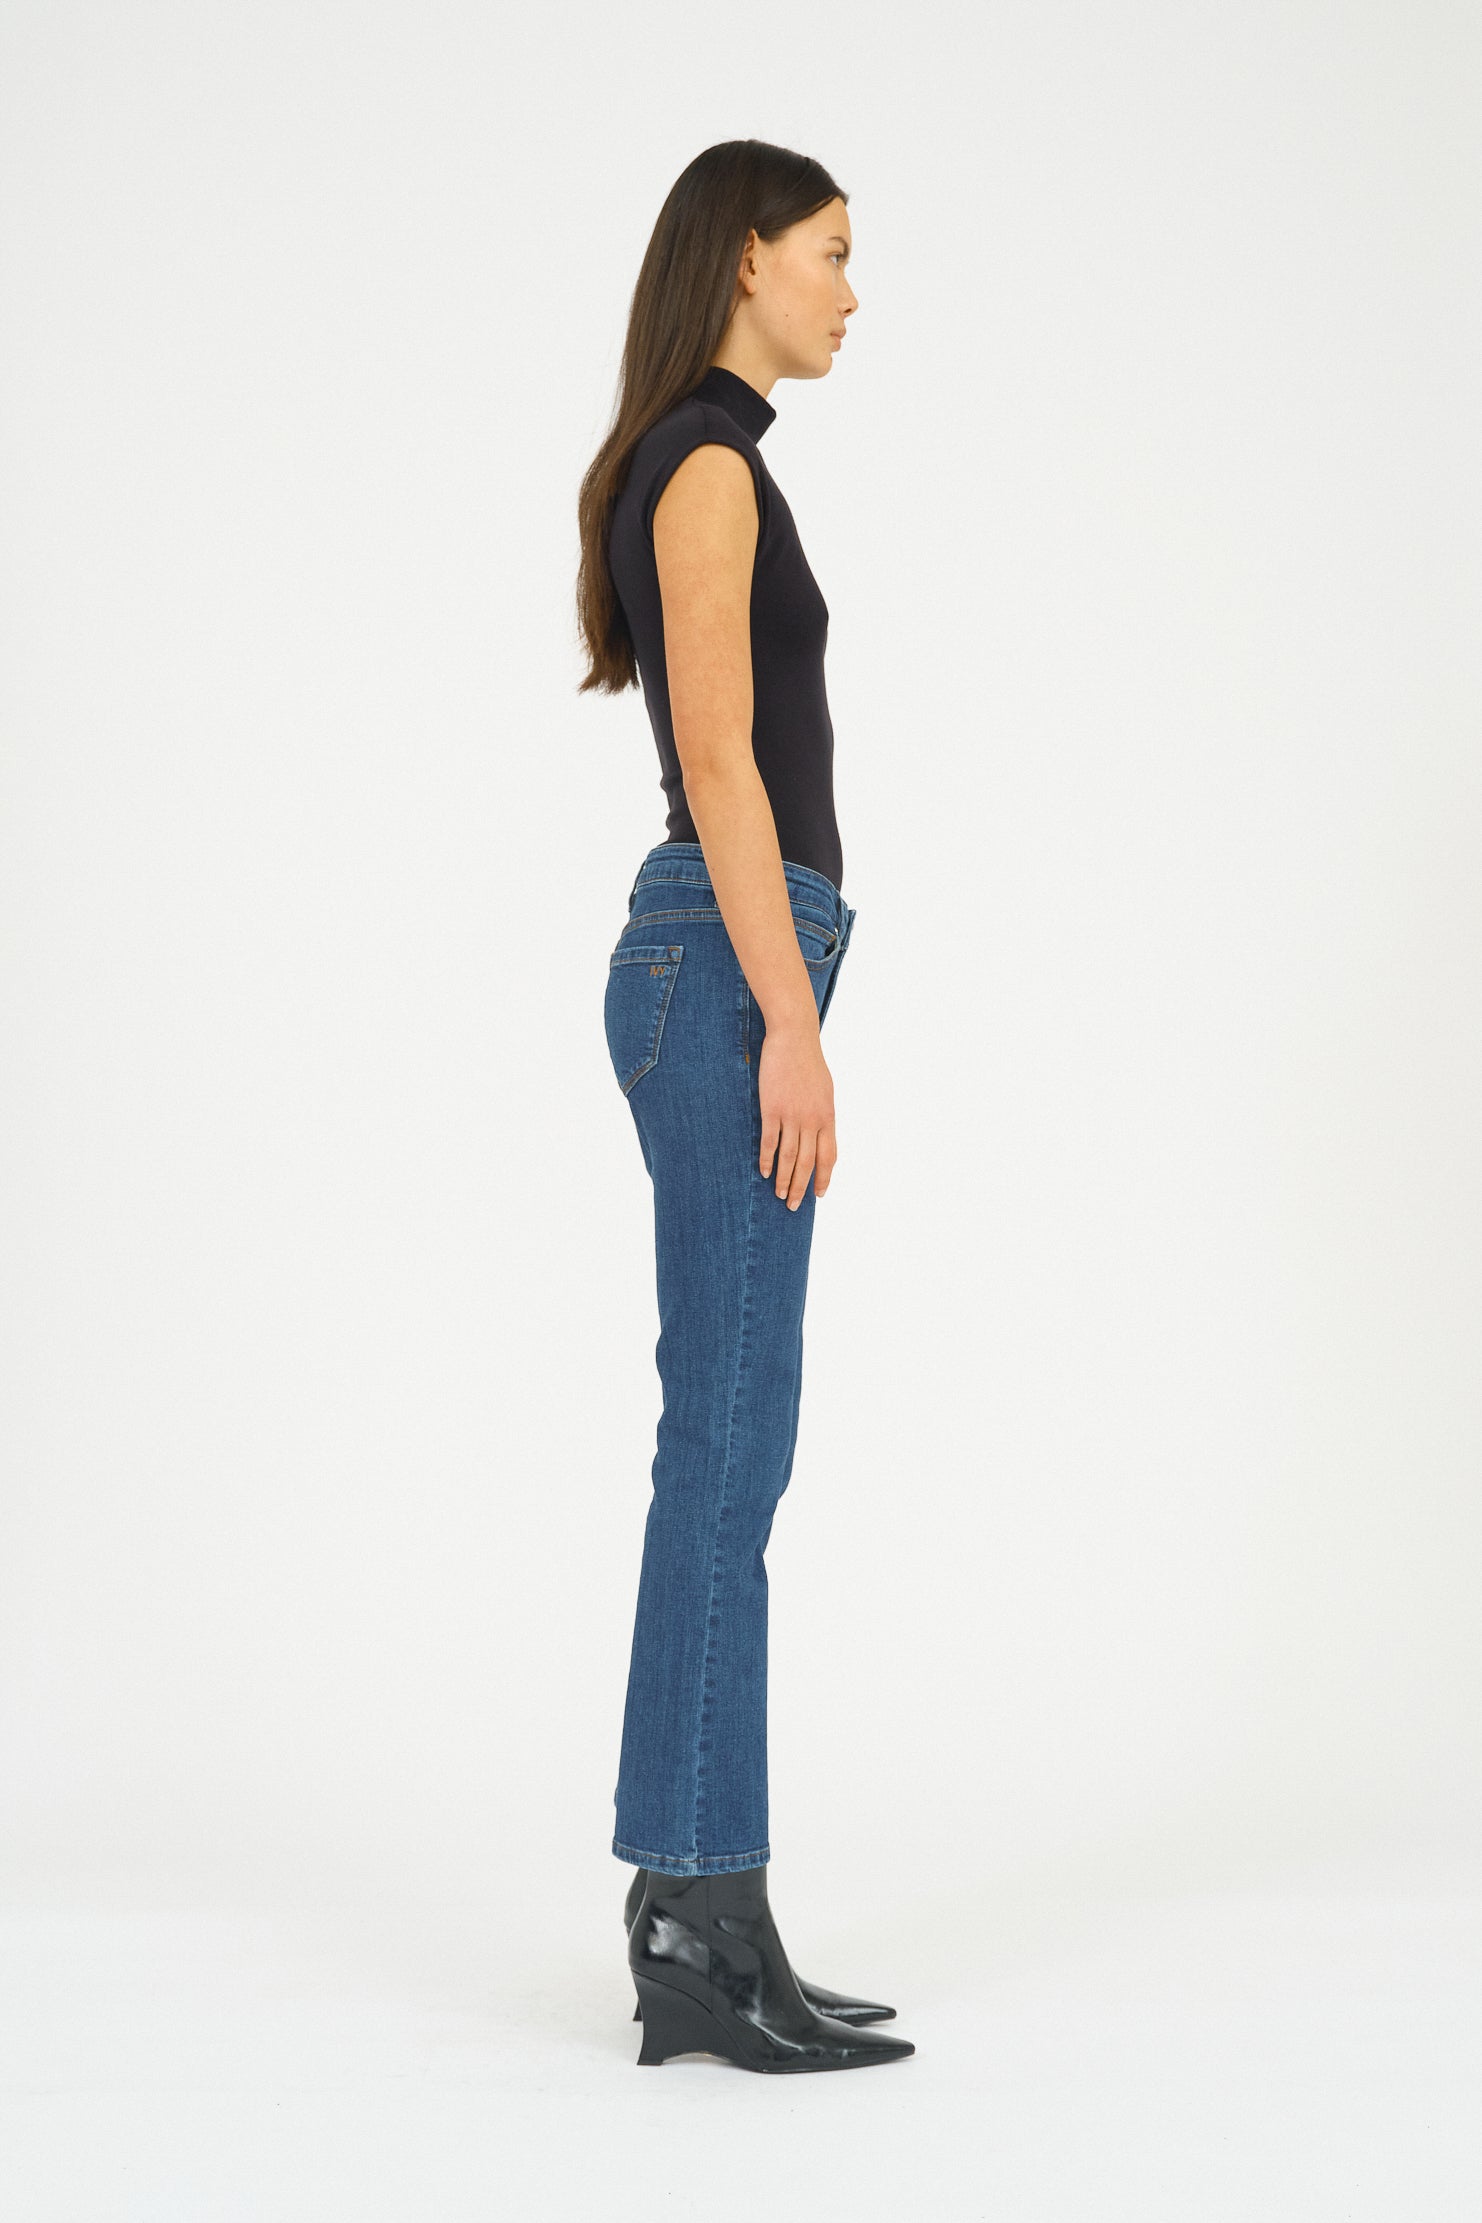 IVY Copenhagen IVY-Johanna Jeans Wash Middark Nottingham Jeans & Pants 51 Denim Blue